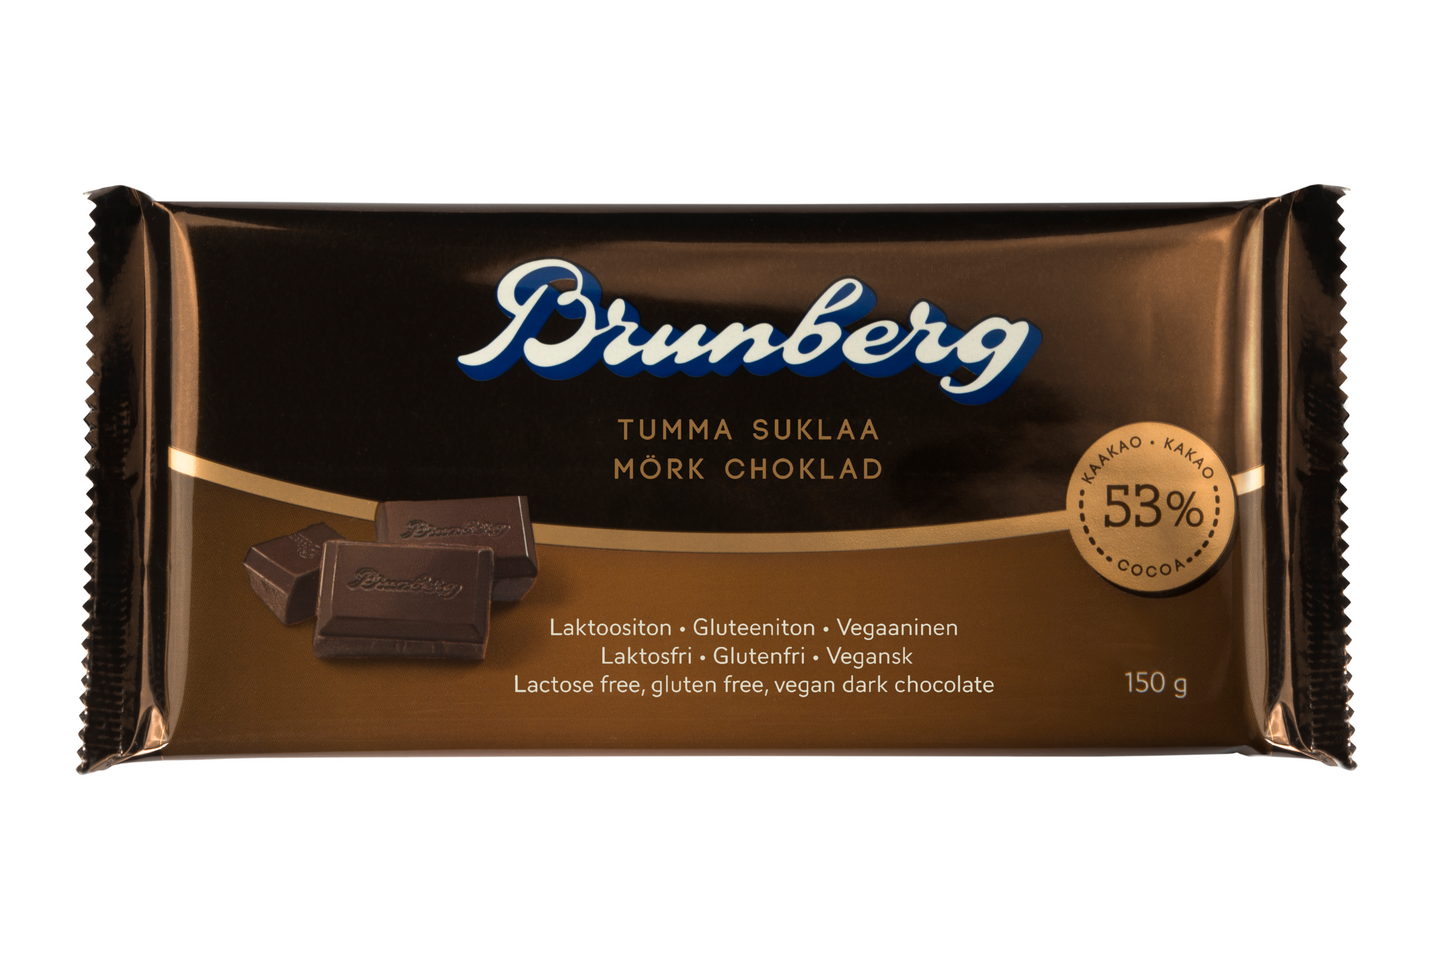 Brunberg Tumma suklaa laktoositon 150g